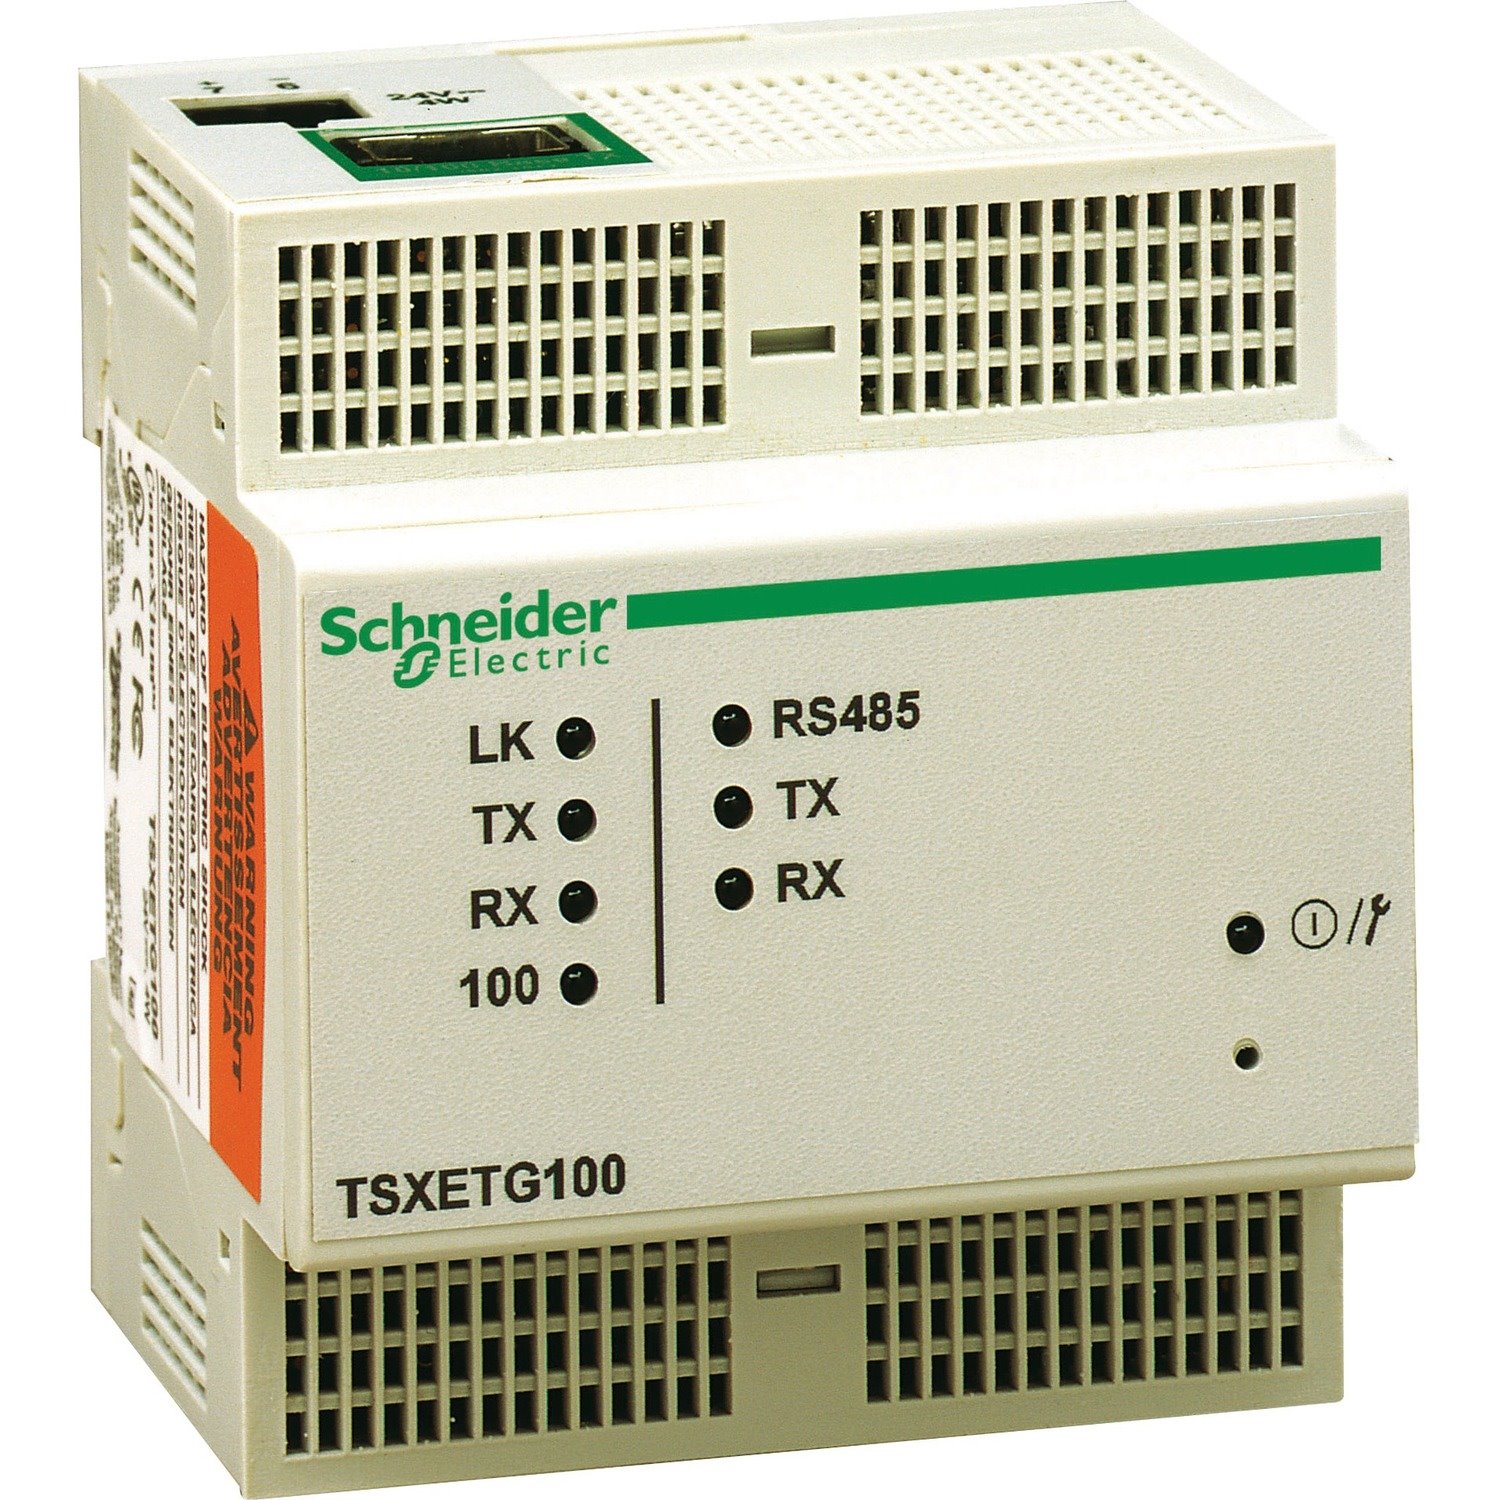 APC by Schneider Electric ConneXium TSXETG100 Device Server